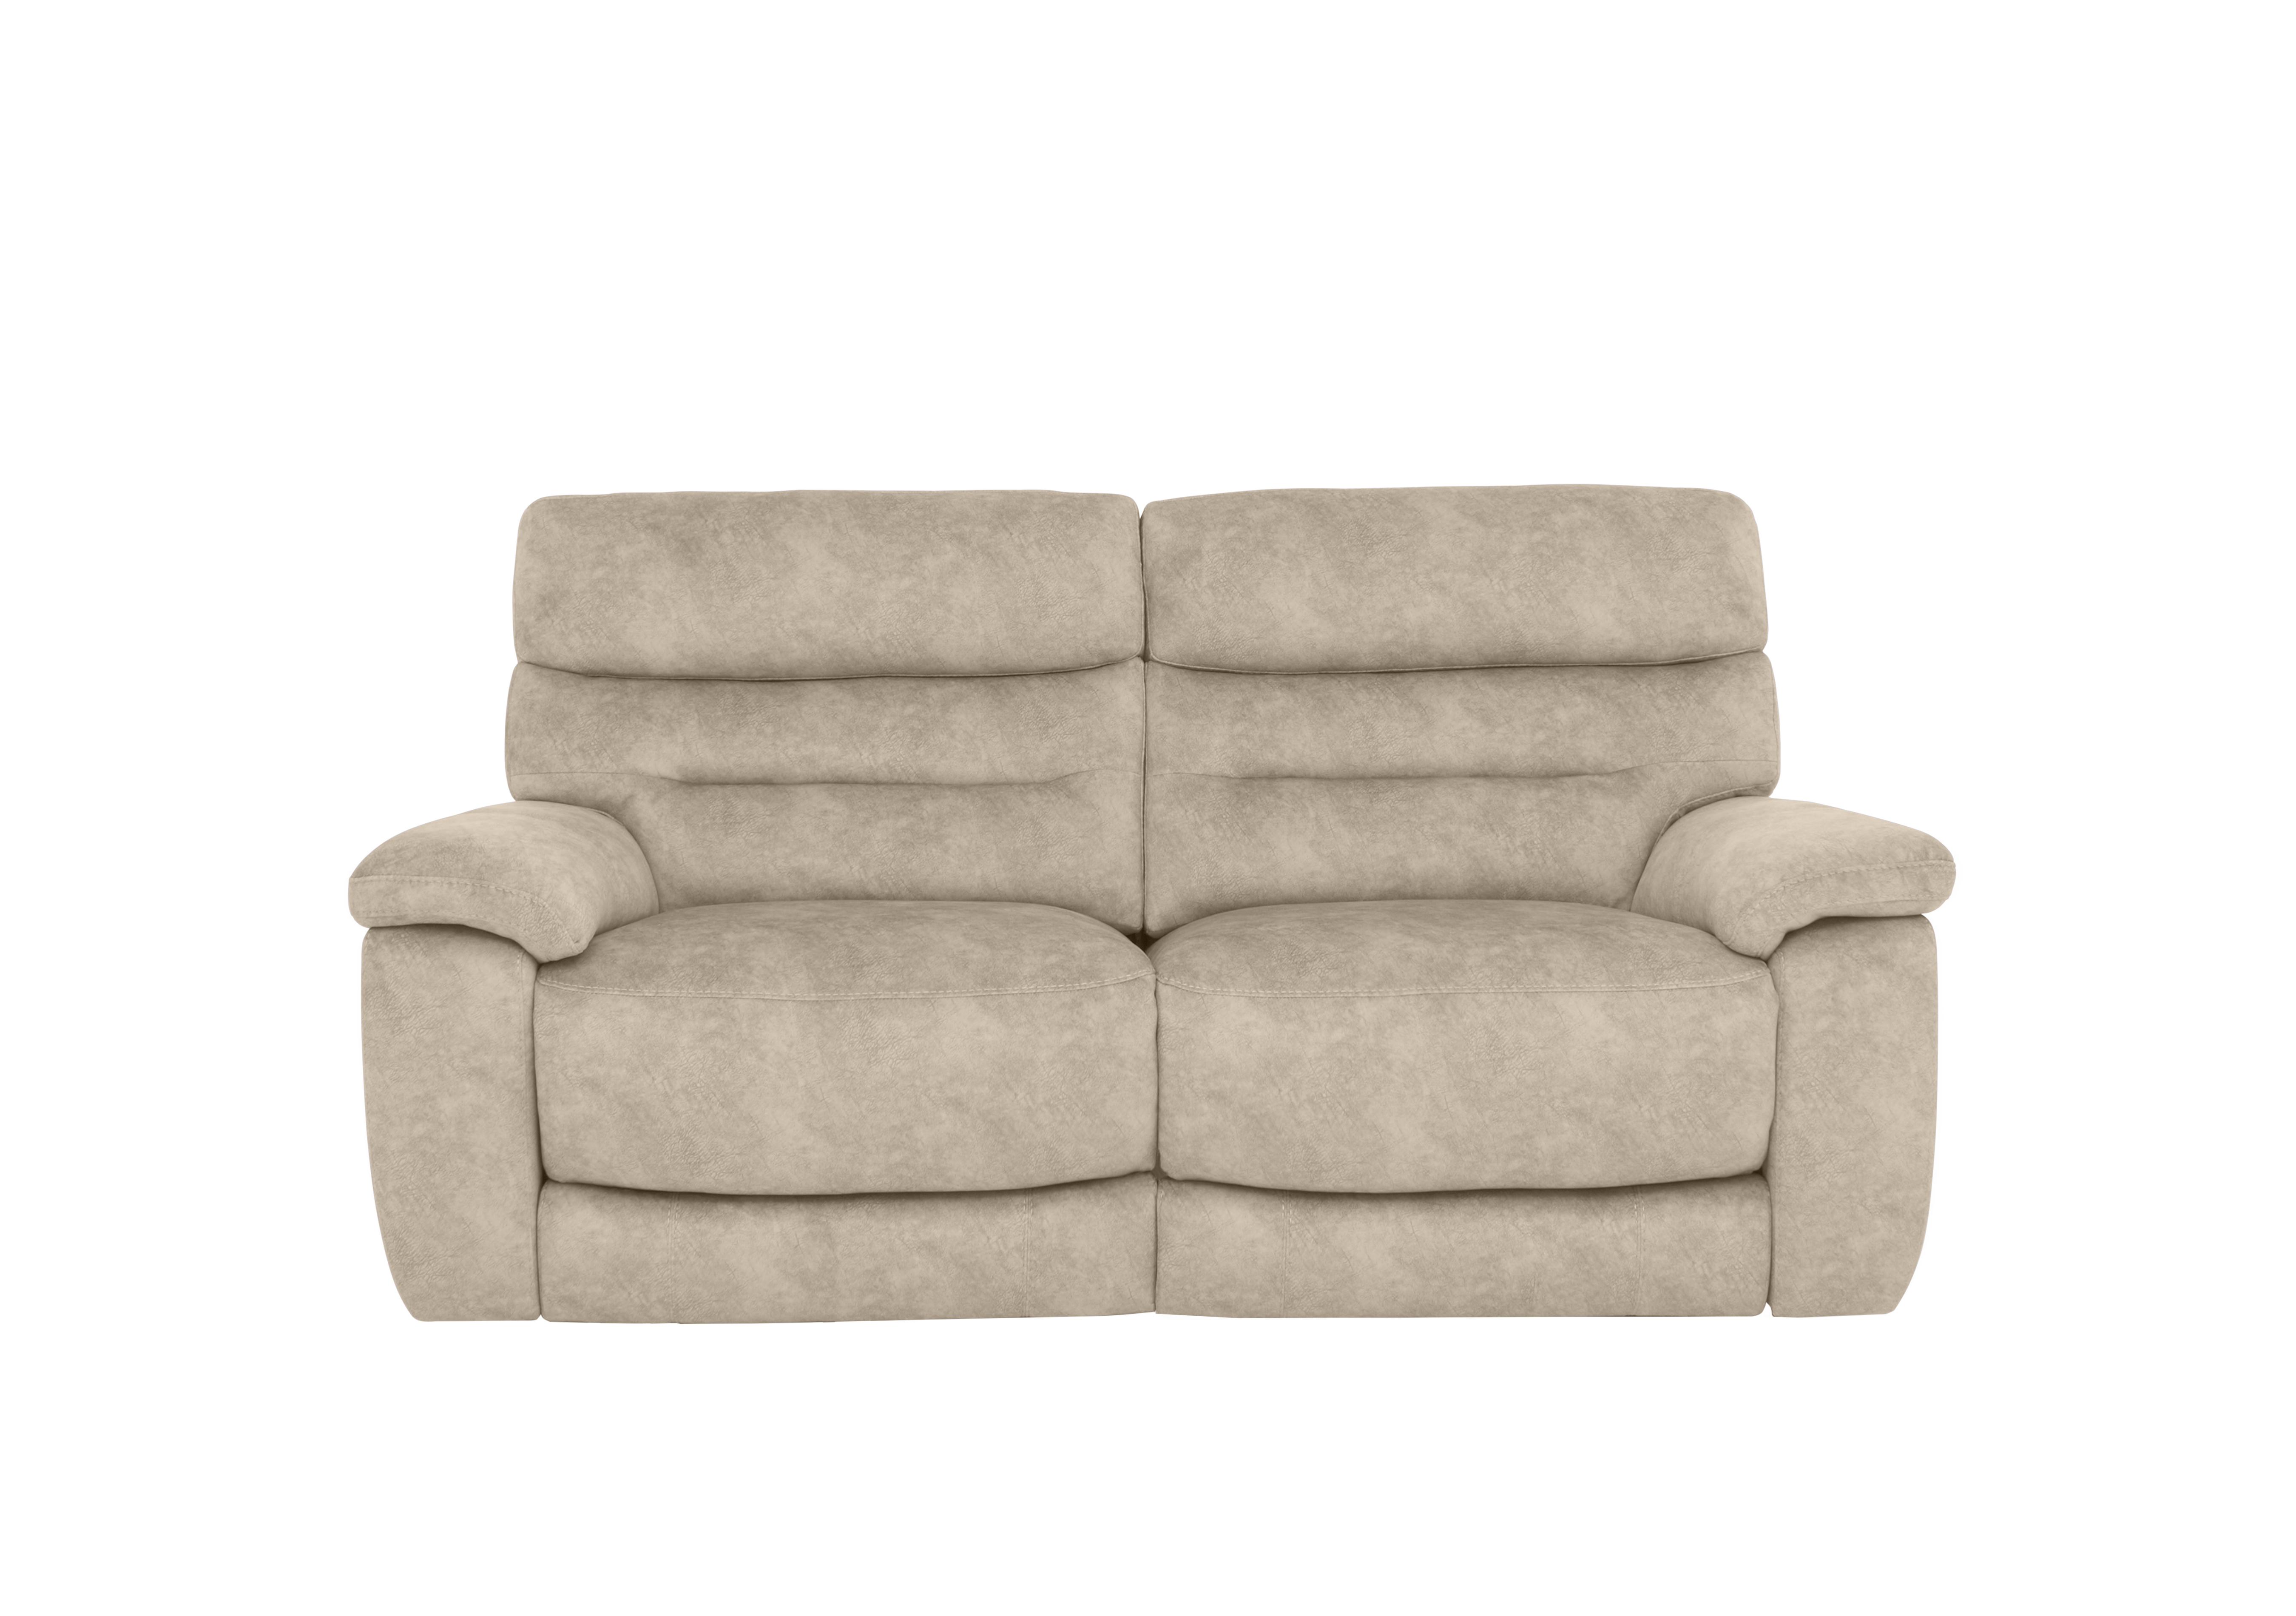 Nimbus 2 Seater Fabric Power Recliner Sofa with Power Headrests in Bfa-Bnn-R26 Cream on Furniture Village